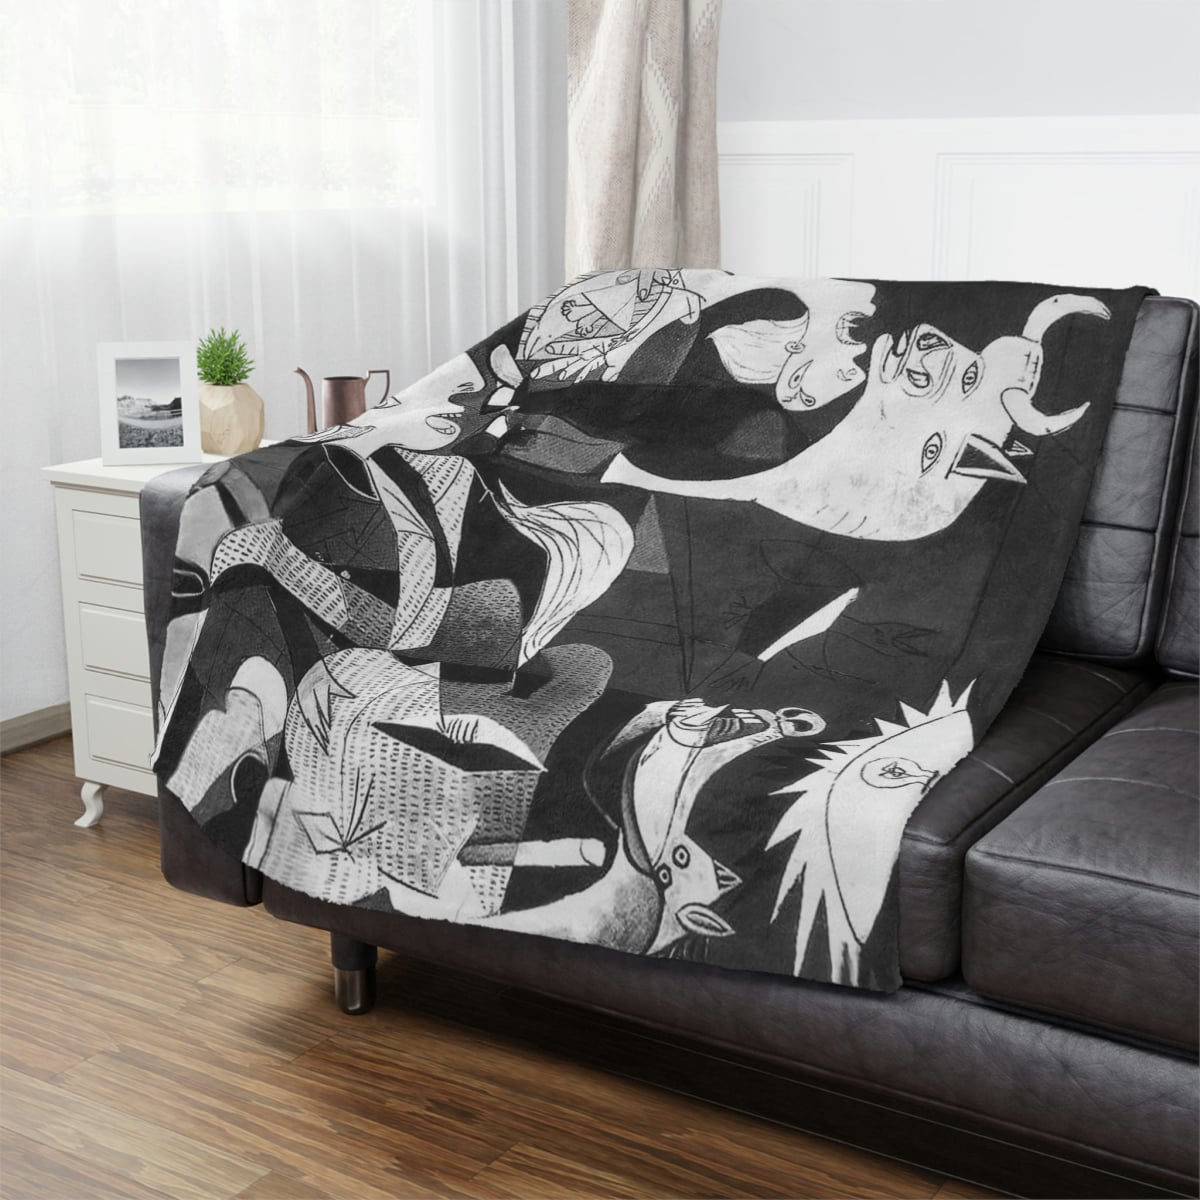 Pablo Picasso Guernica Art Blanket draped over a sofa